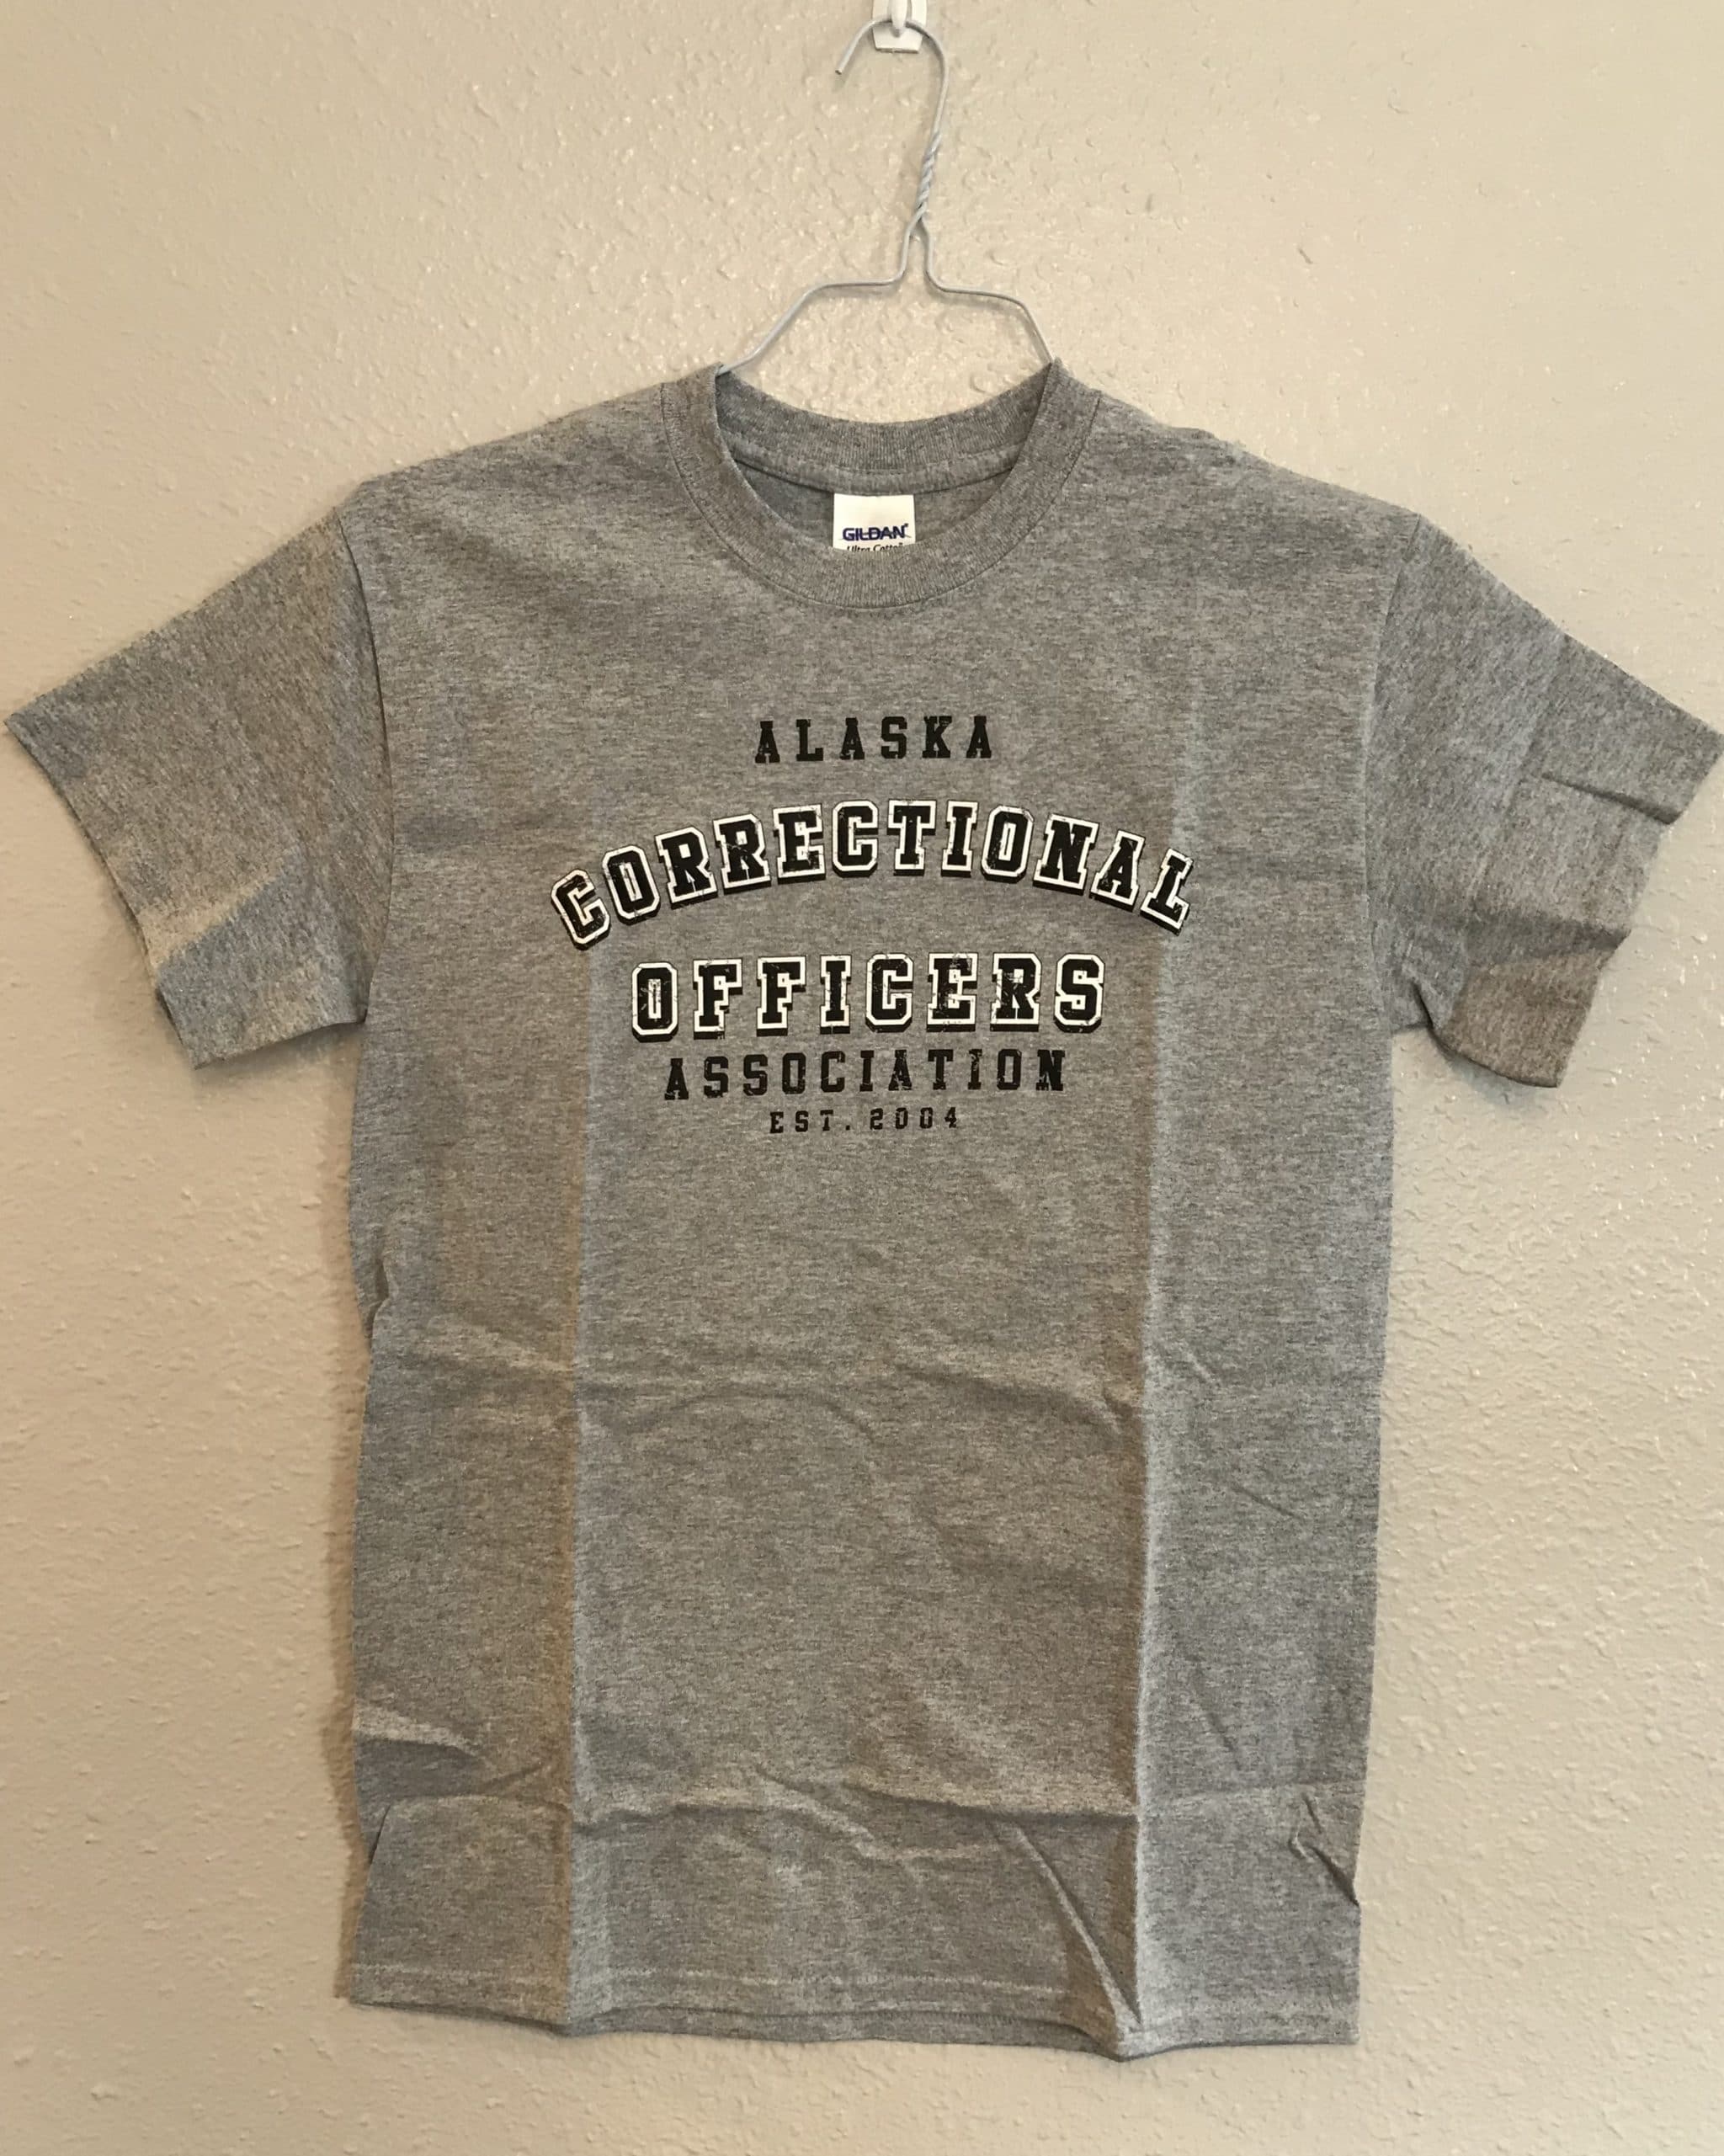 Association T-Shirt - Alaska Correctional Officers Association